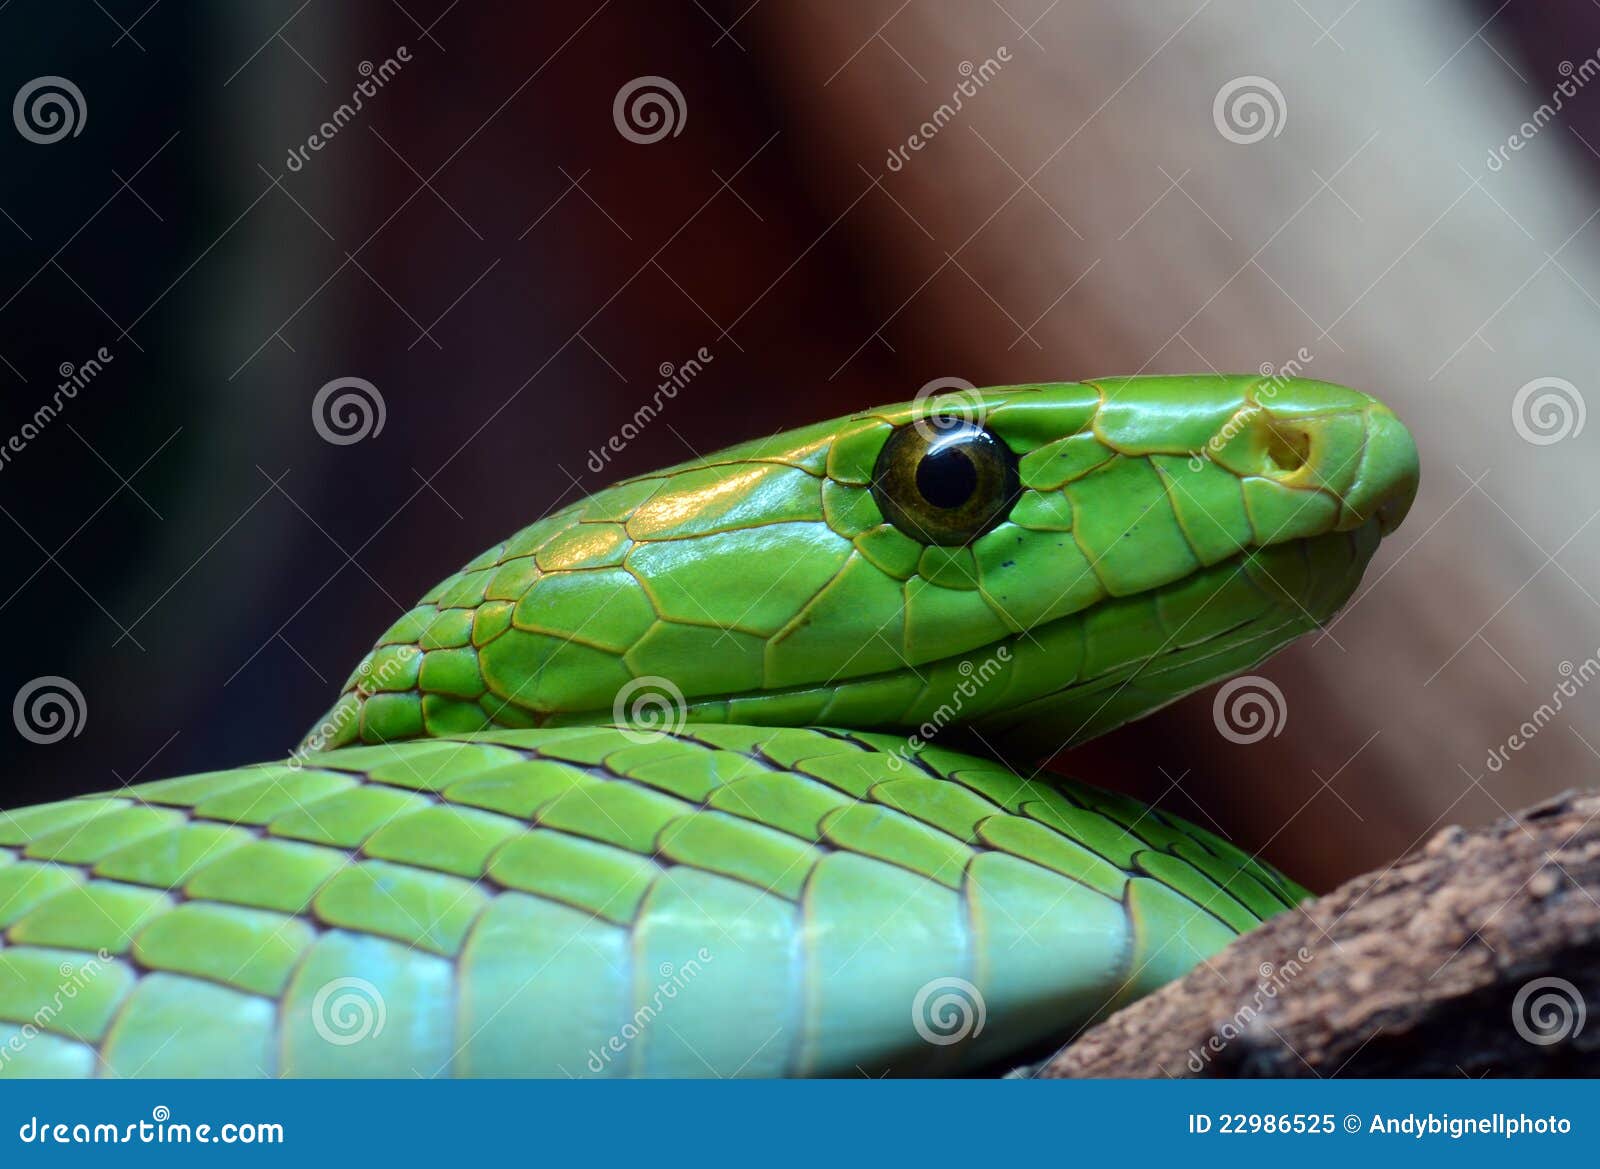 eastern green mamba close-up